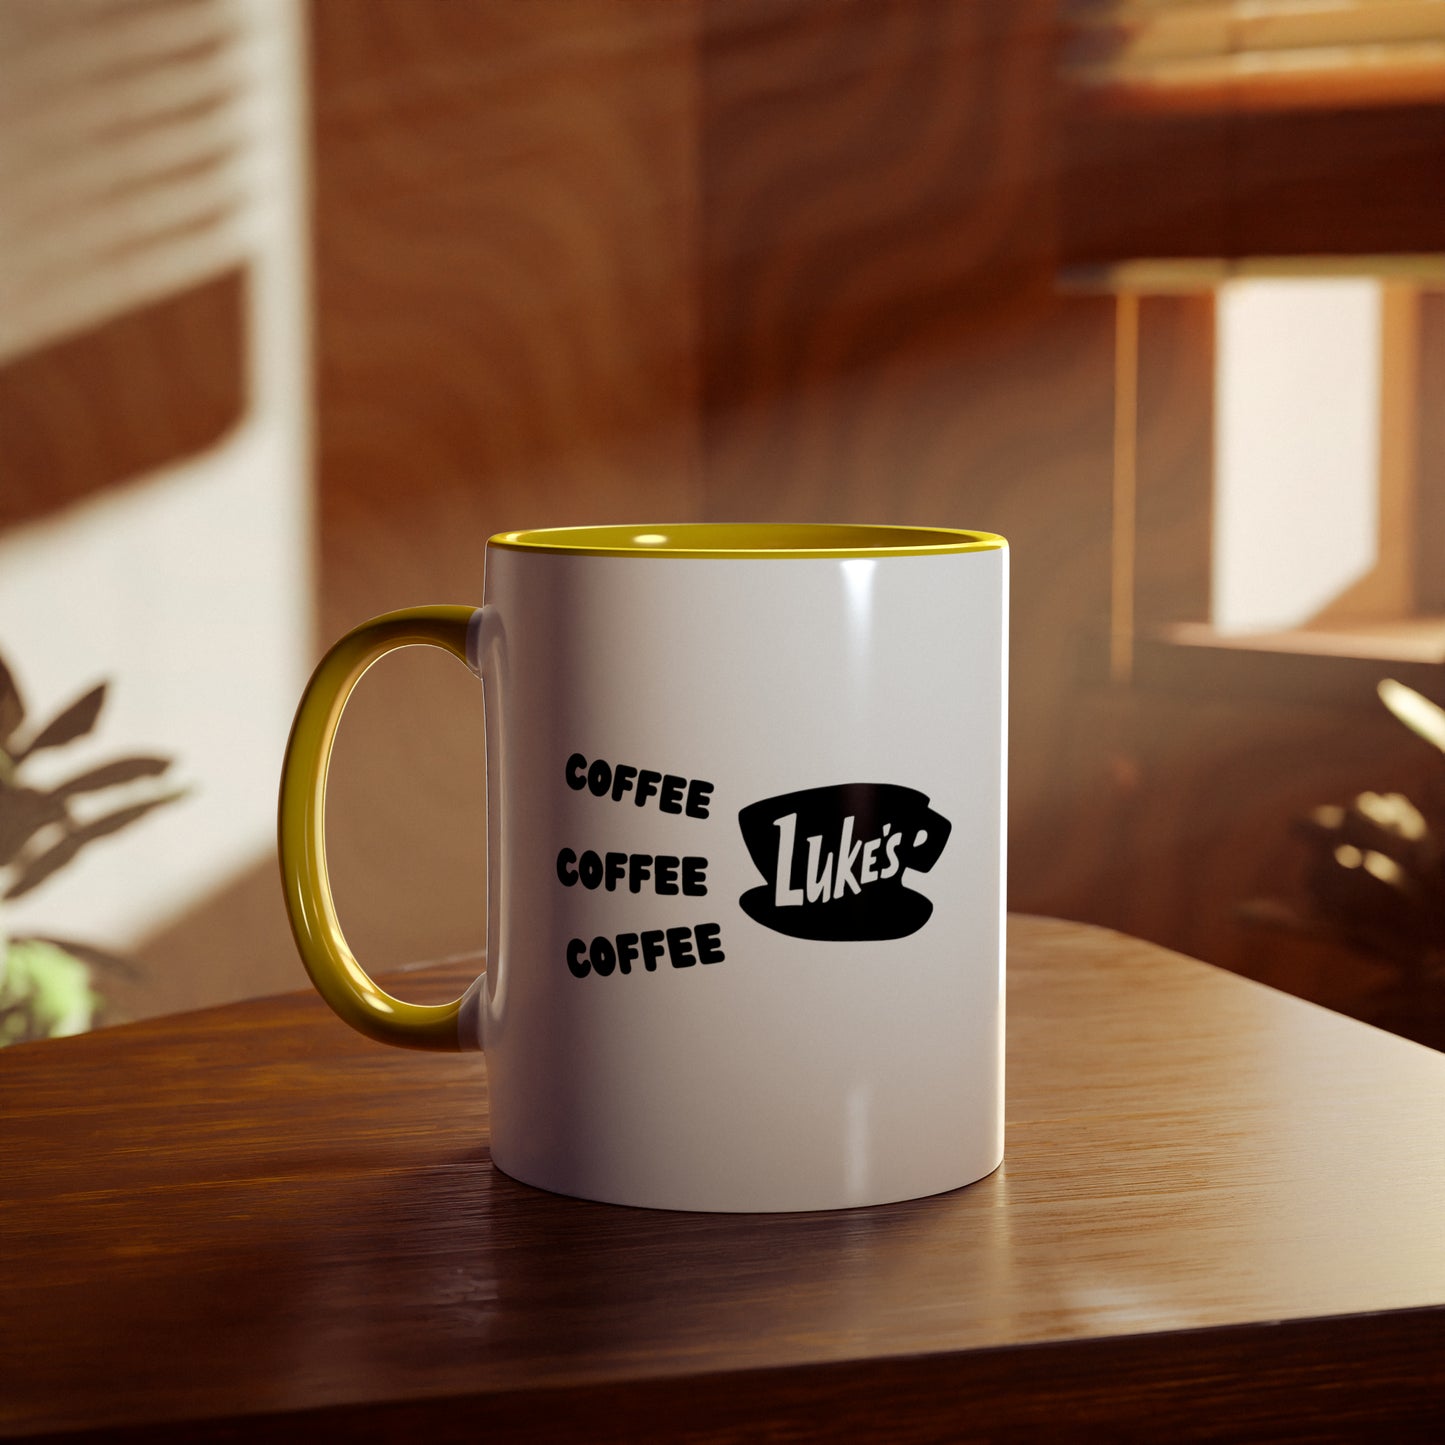 COFFEE, COFFEE, COFFEE / Gilmore Girls Mug